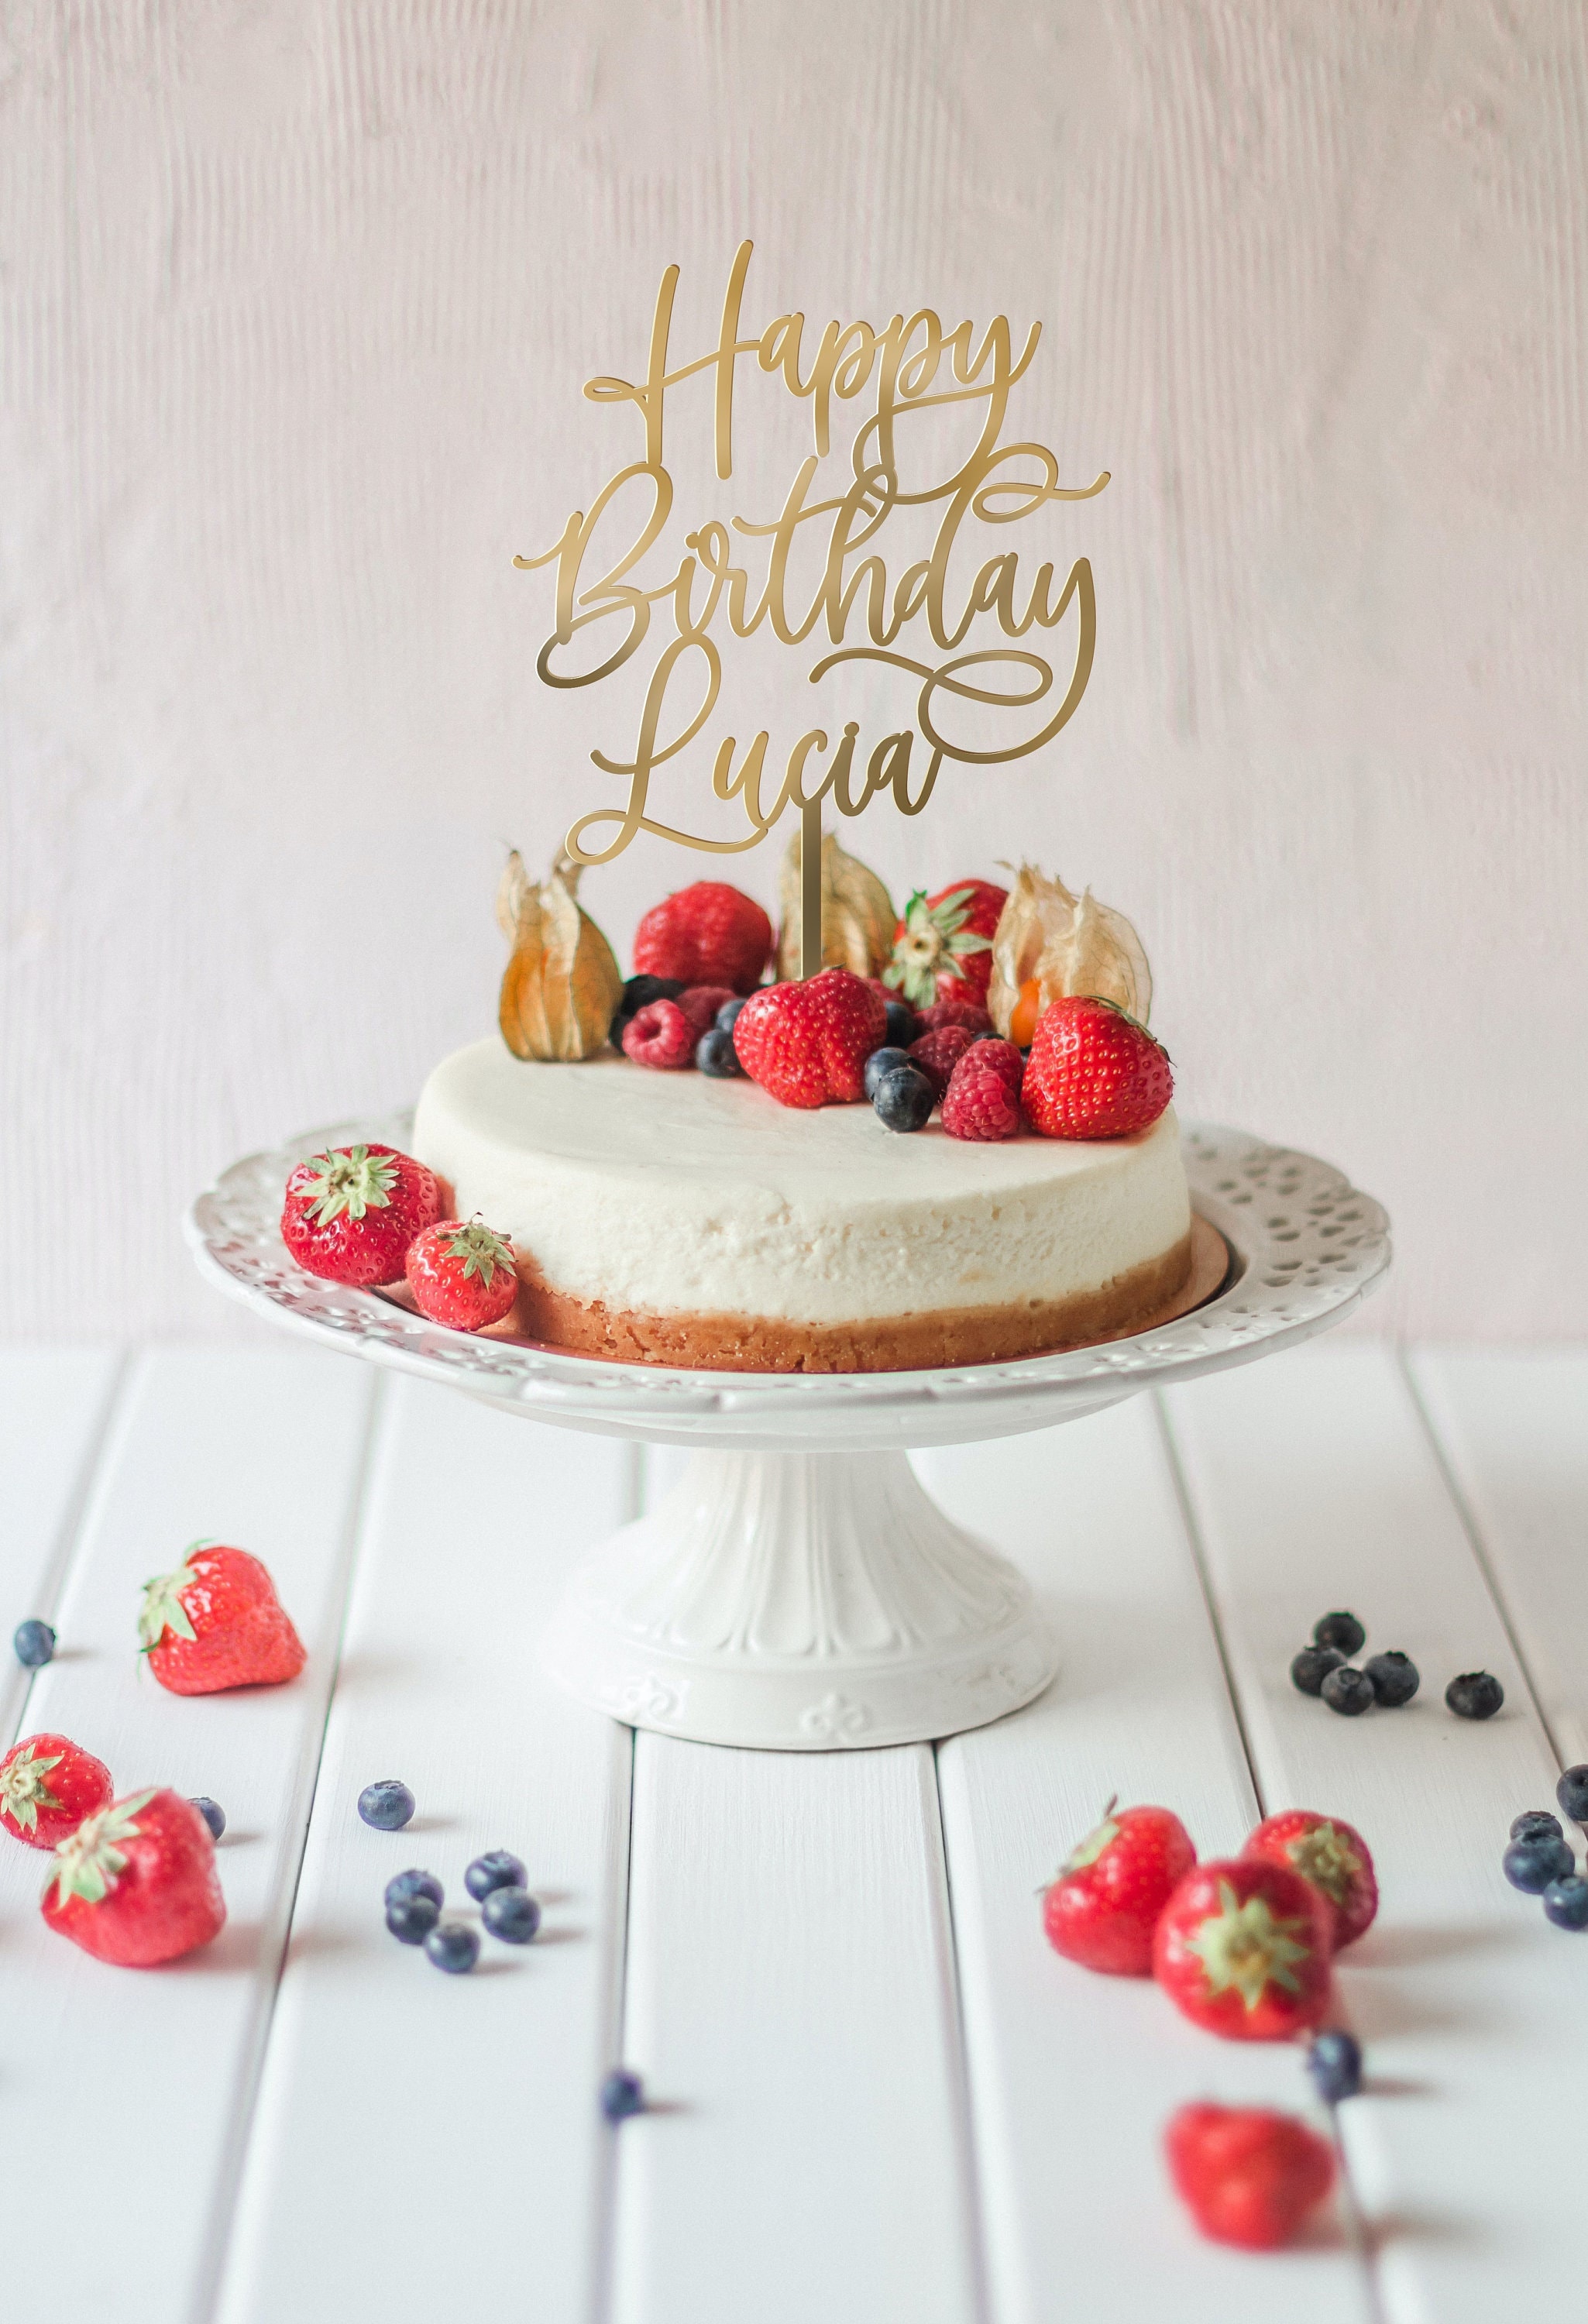 BakeMaestro Happy Birthday Cake Toppers - Gold Acrylic Cake Topper